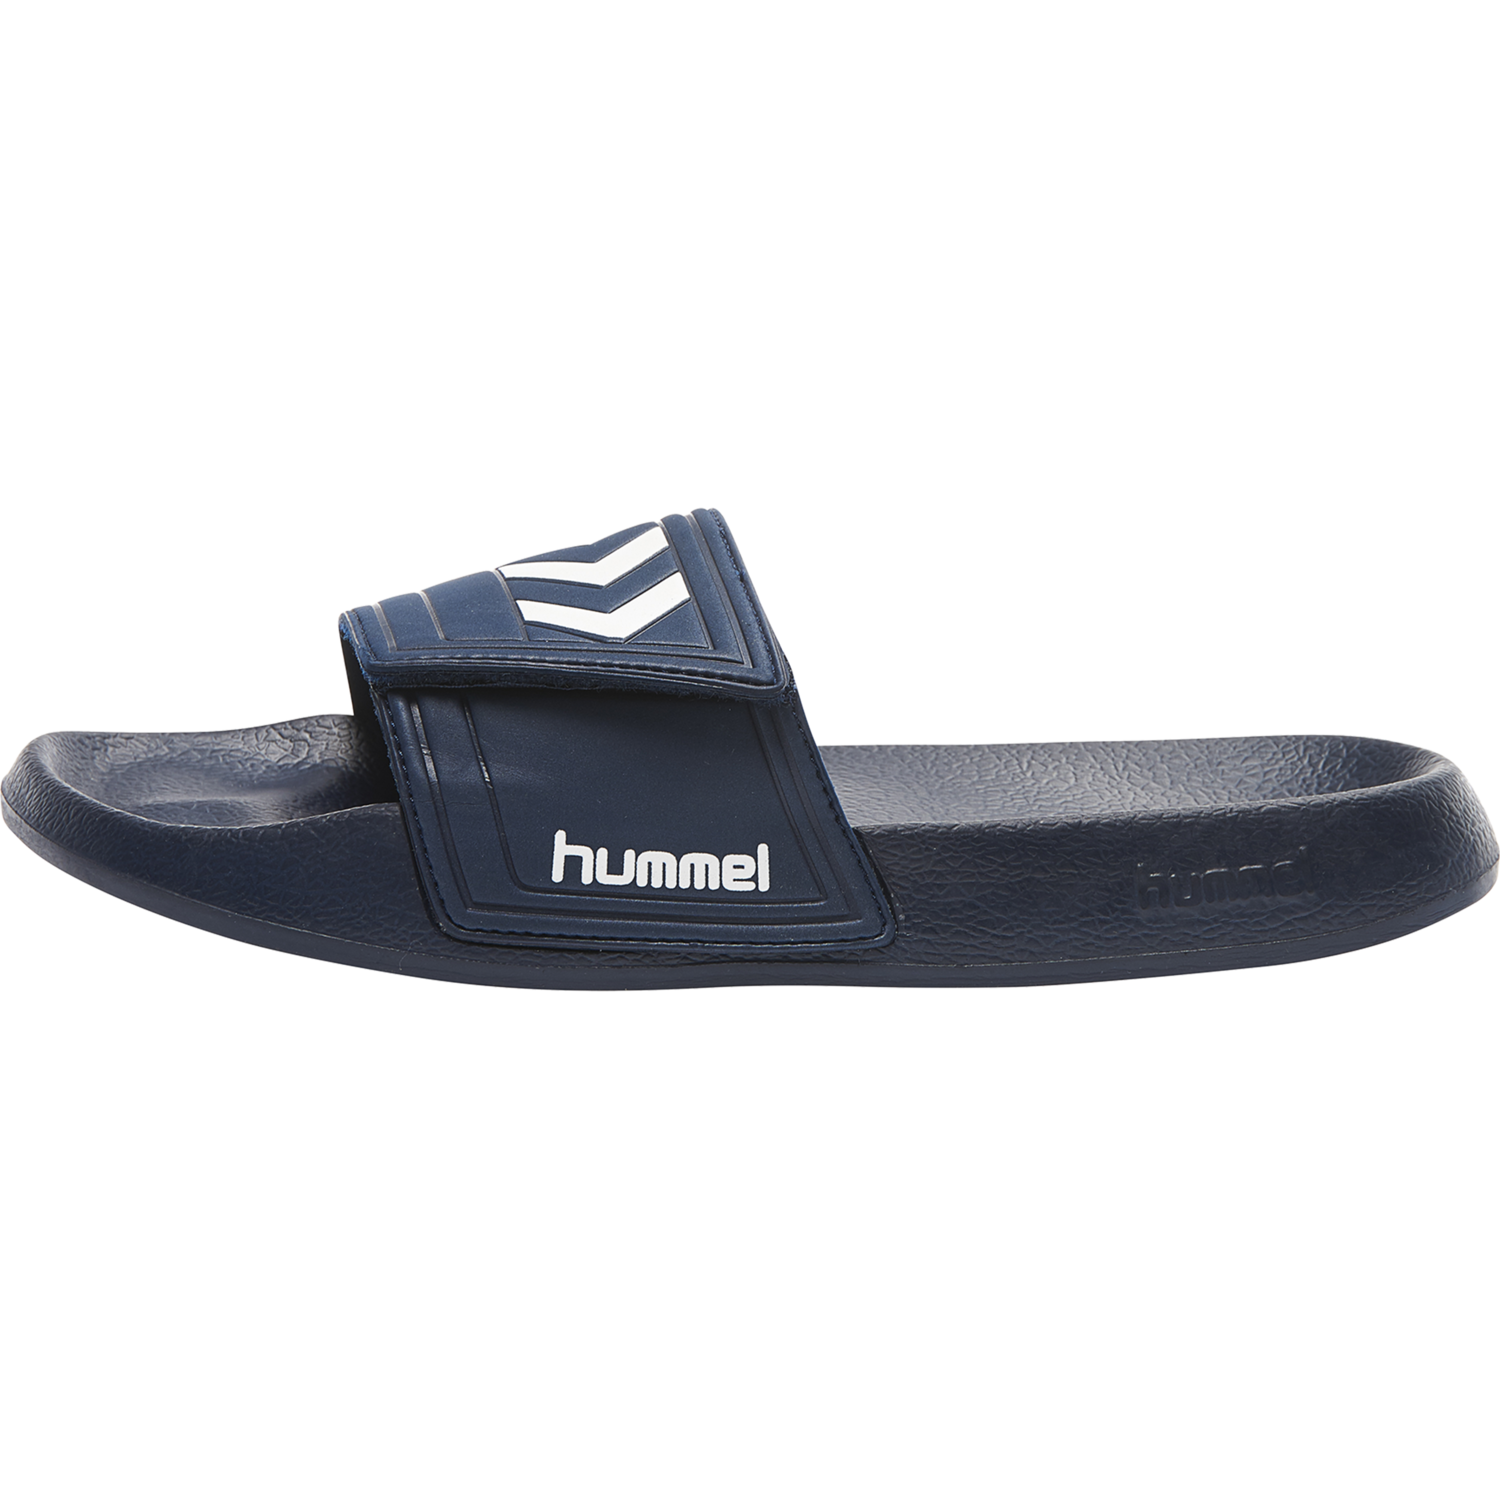 hummel Unisex Adults’ Pool Slide Retro Beach & Pool Shoes 